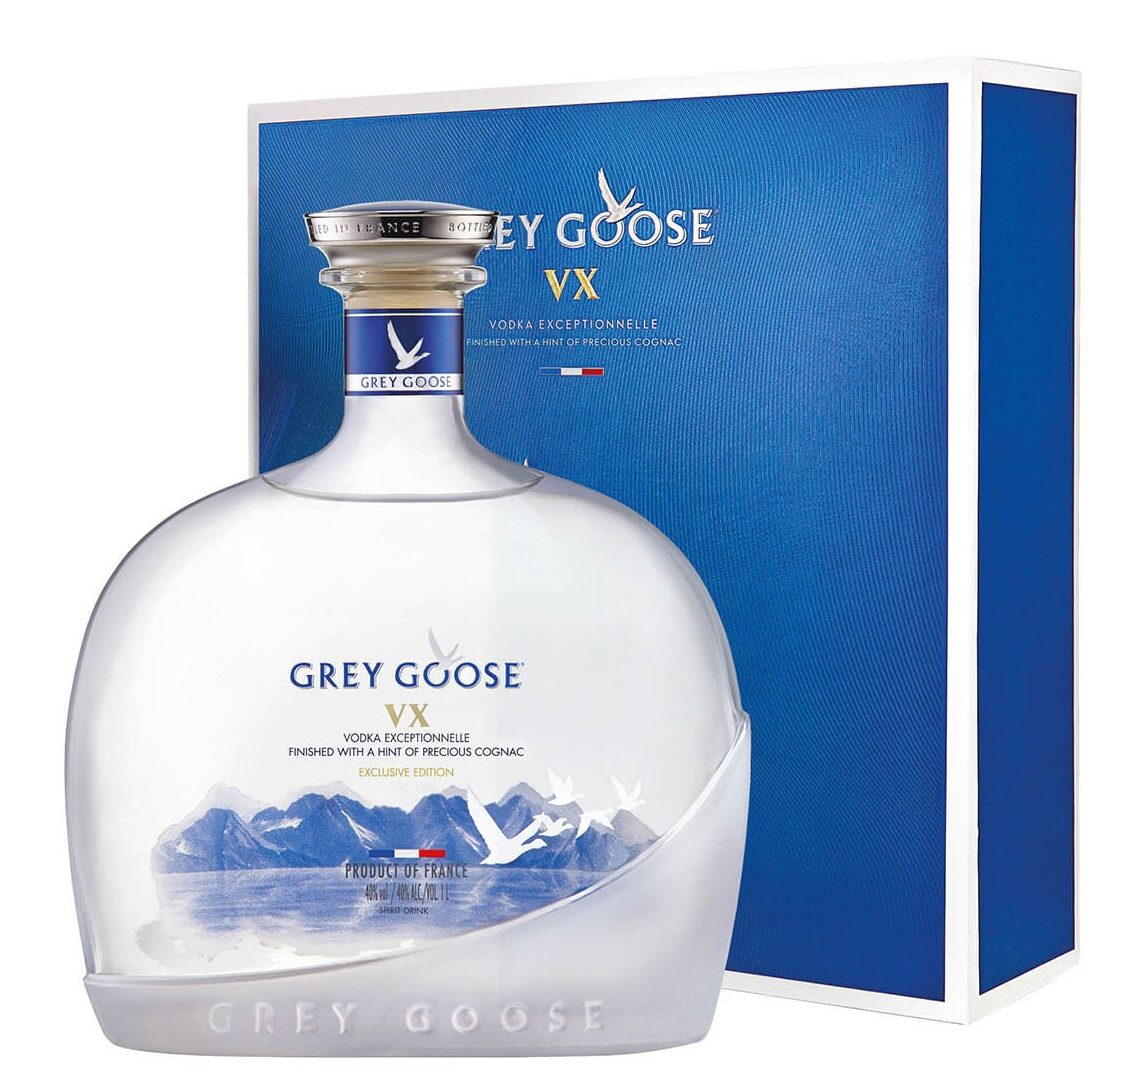 Grey Goose Vodka (750ml) - Kosher Wine Direct